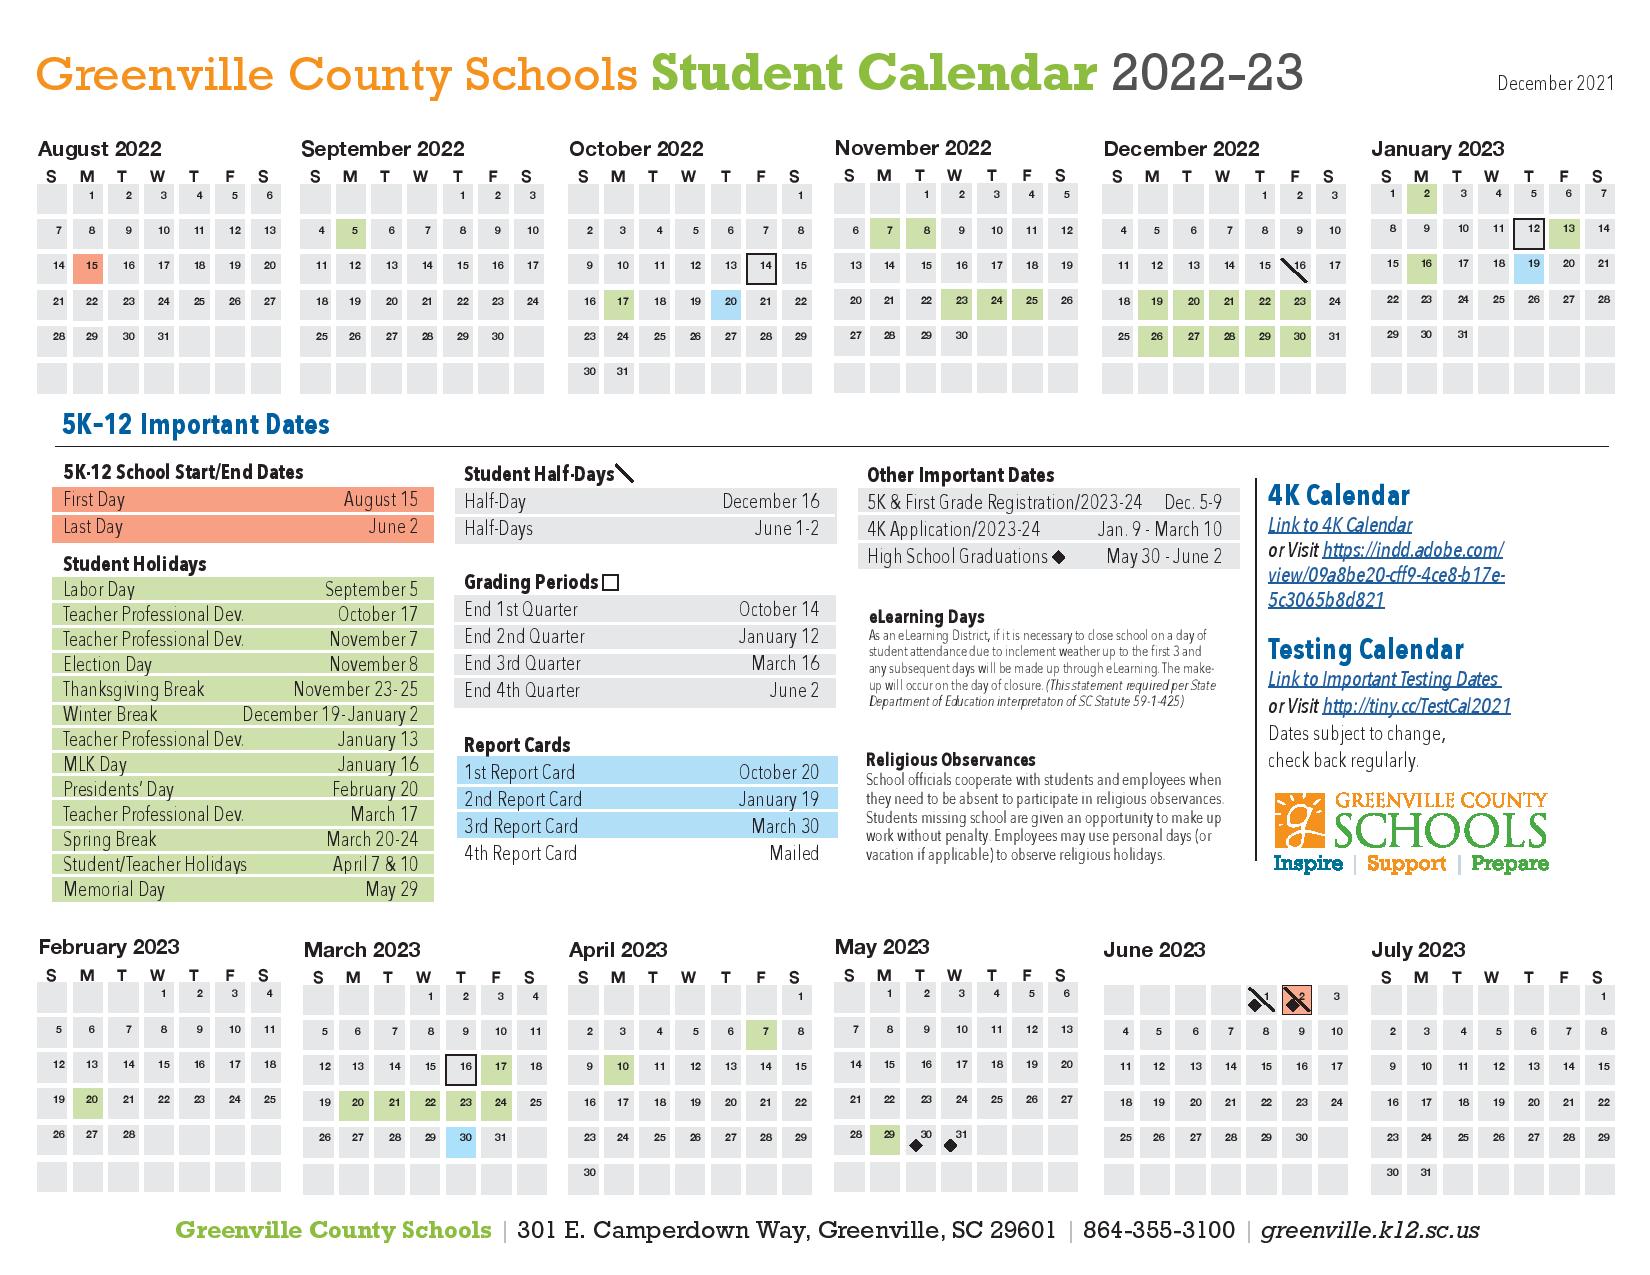 Greenville County Schools Calendar 20222023 in PDF Public Holidays